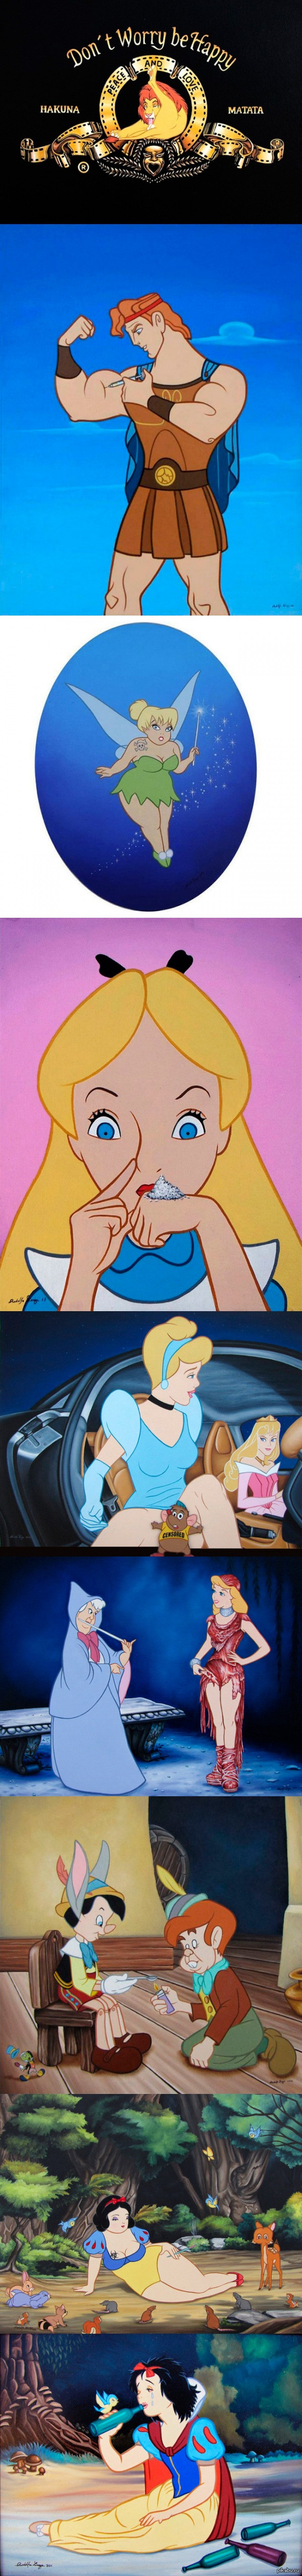 Unusual images of Disney characters by Jose Rodolfo Loaiza 16+ - NSFW, Disney princesses, Cartoon characters, Longpost